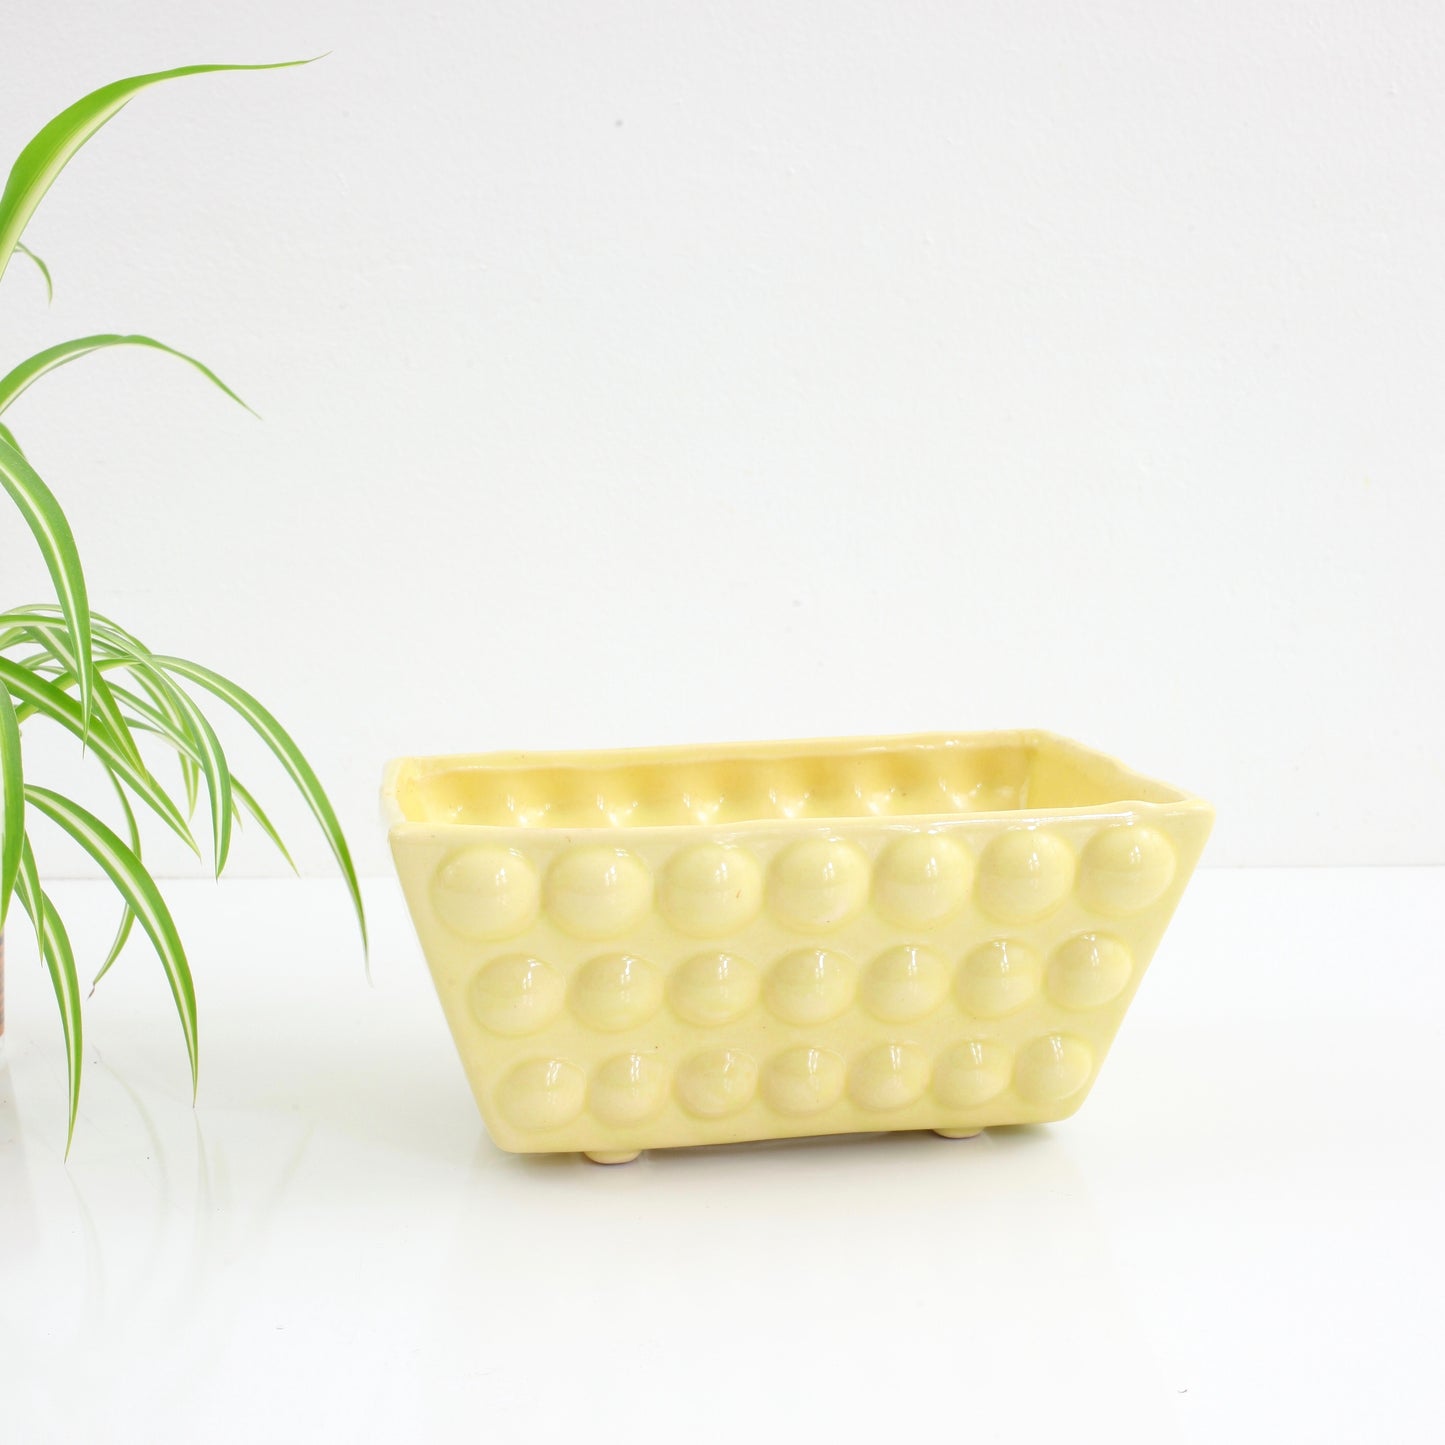 SOLD - Vintage Bumpy Yellow Ceramic Planter